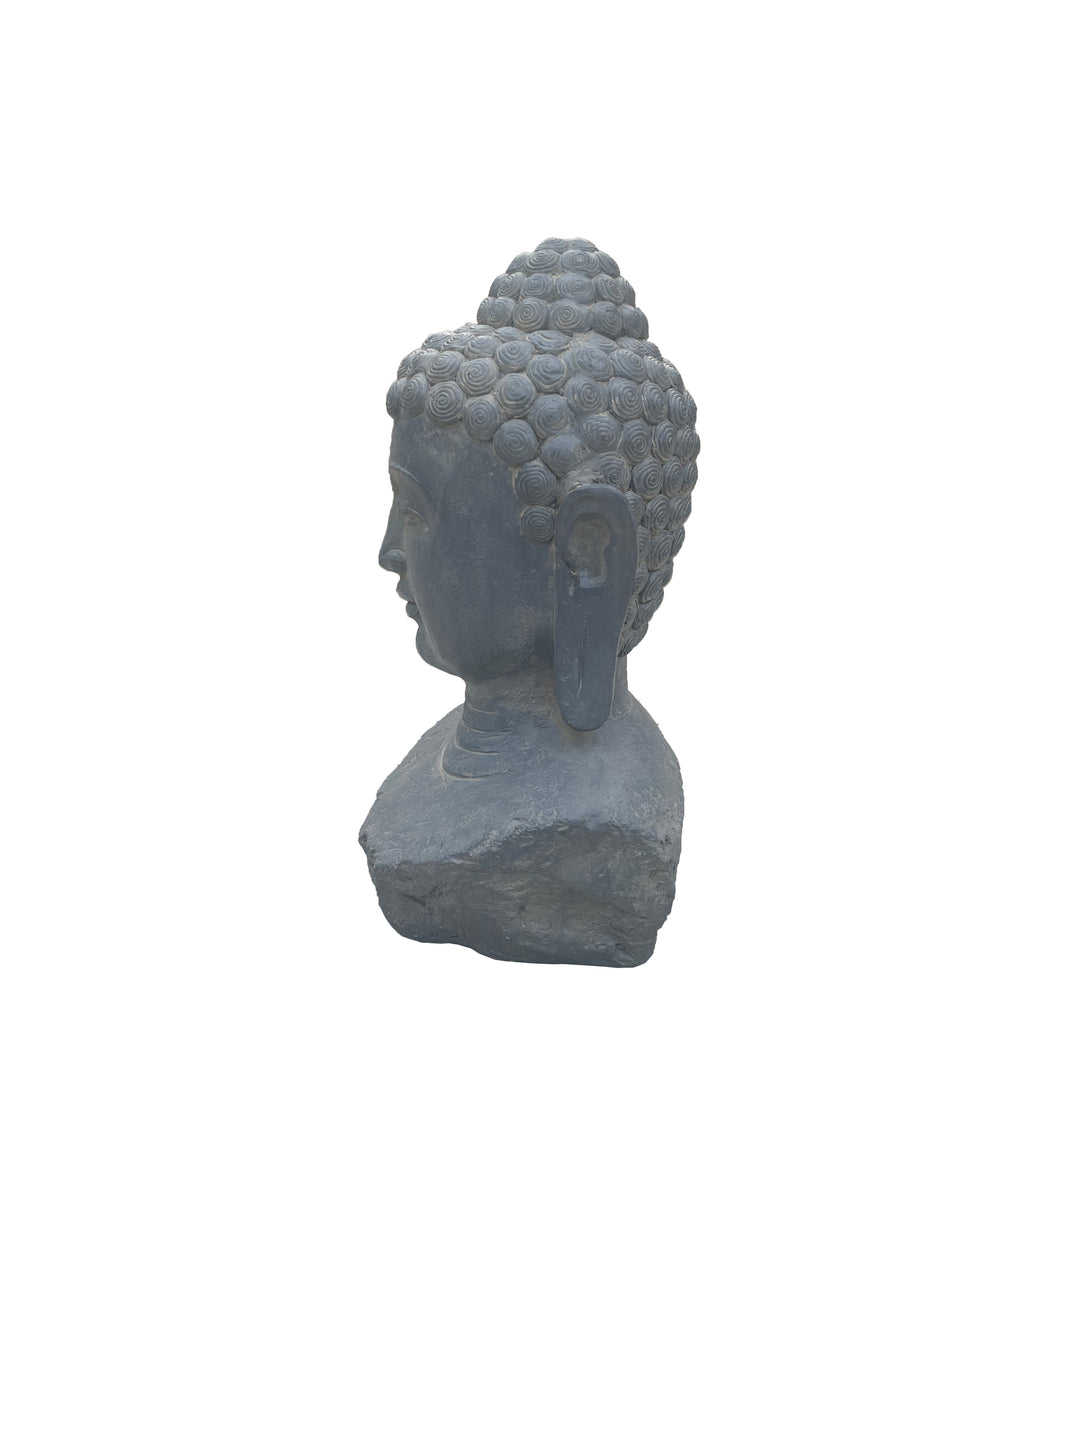 77135 - Serenity Enlightened Zen Buddha Head Statue Hi-Line Gift Ltd.